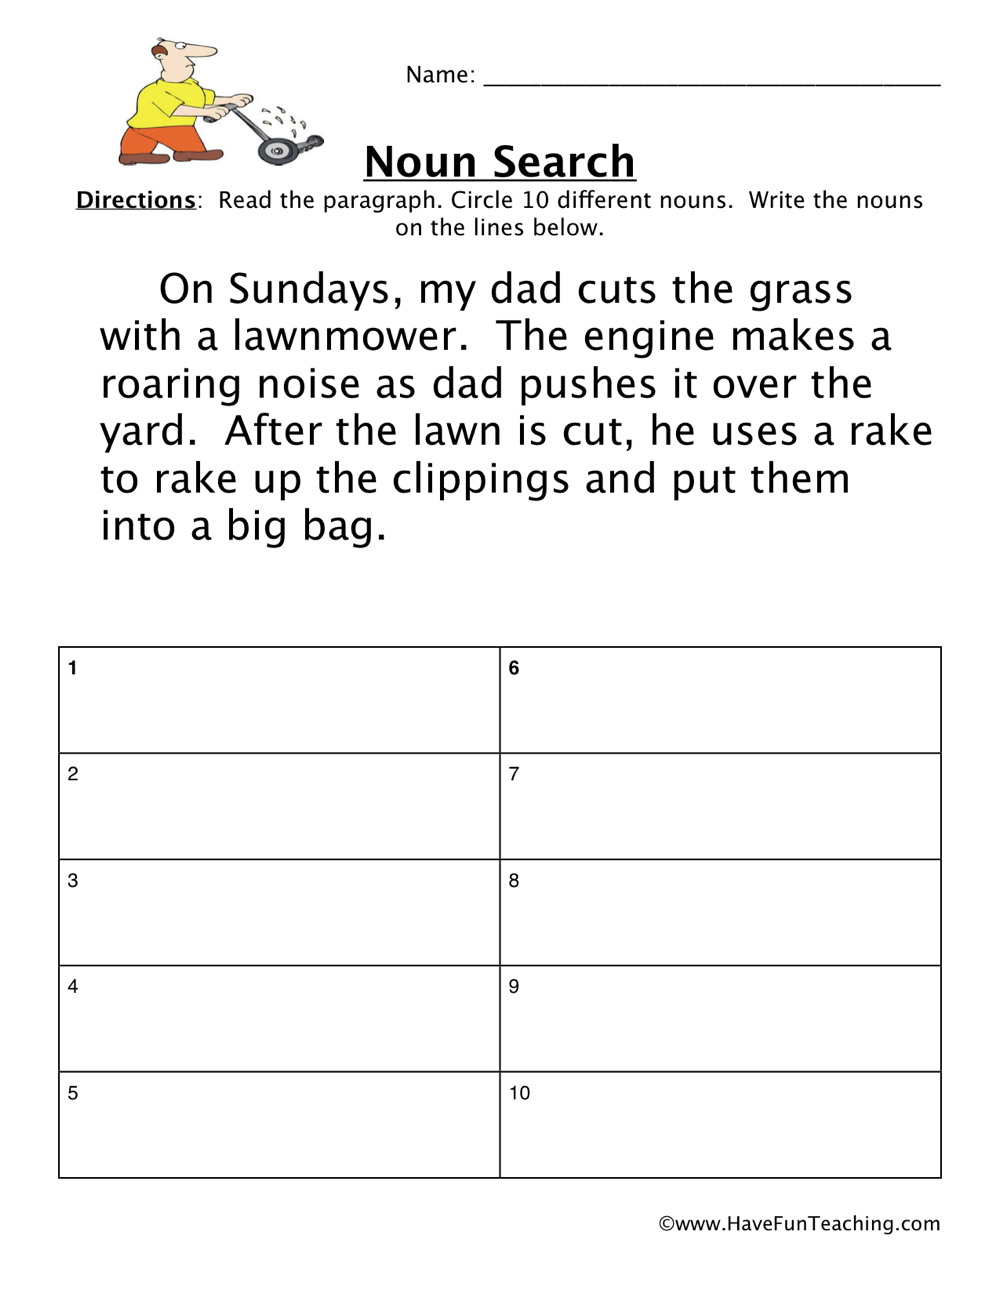 finding-nouns-worksheet-have-fun-teaching-db-excel